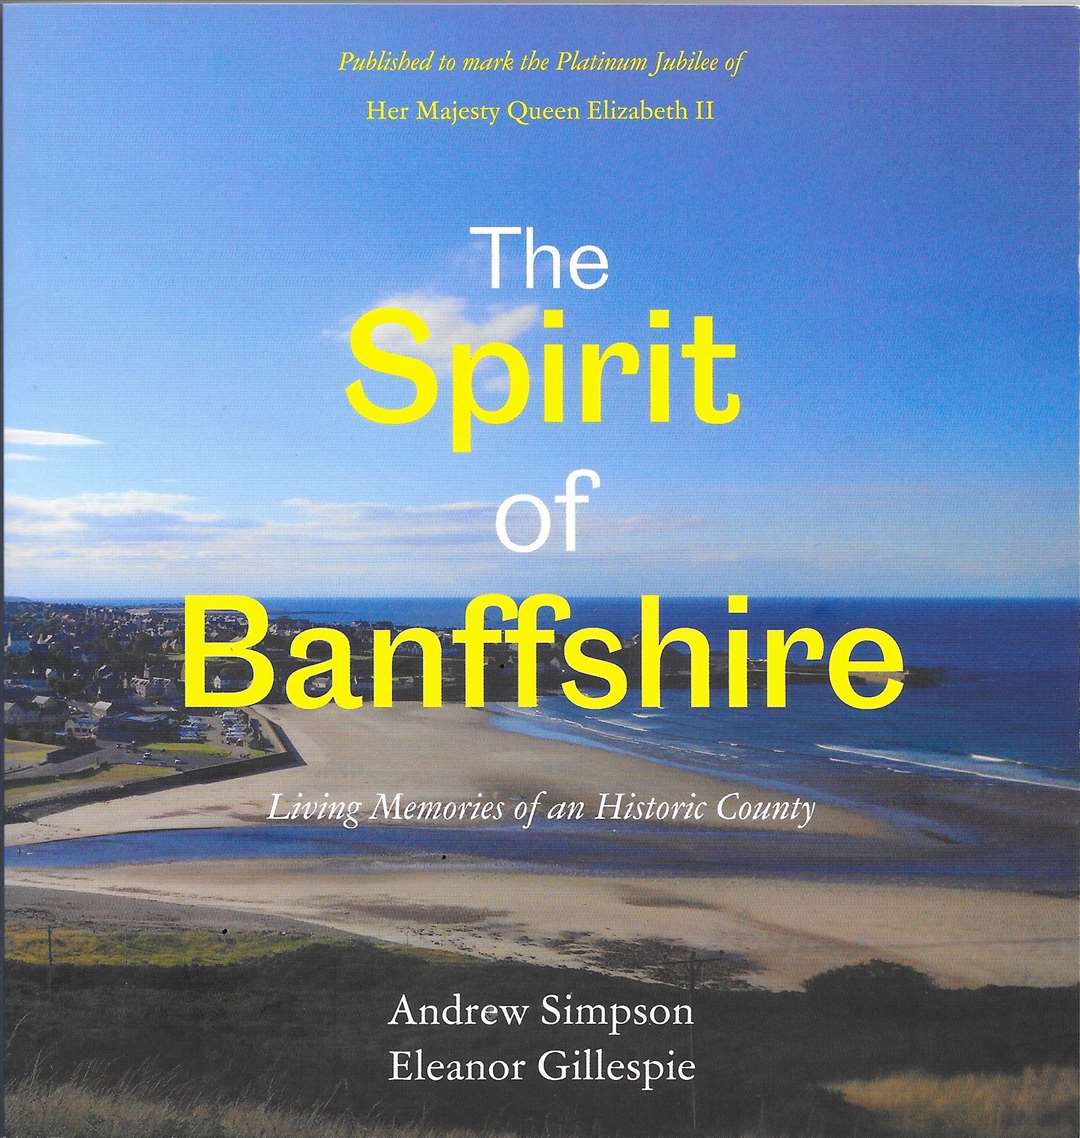 New book The Spirit of Banffshire.